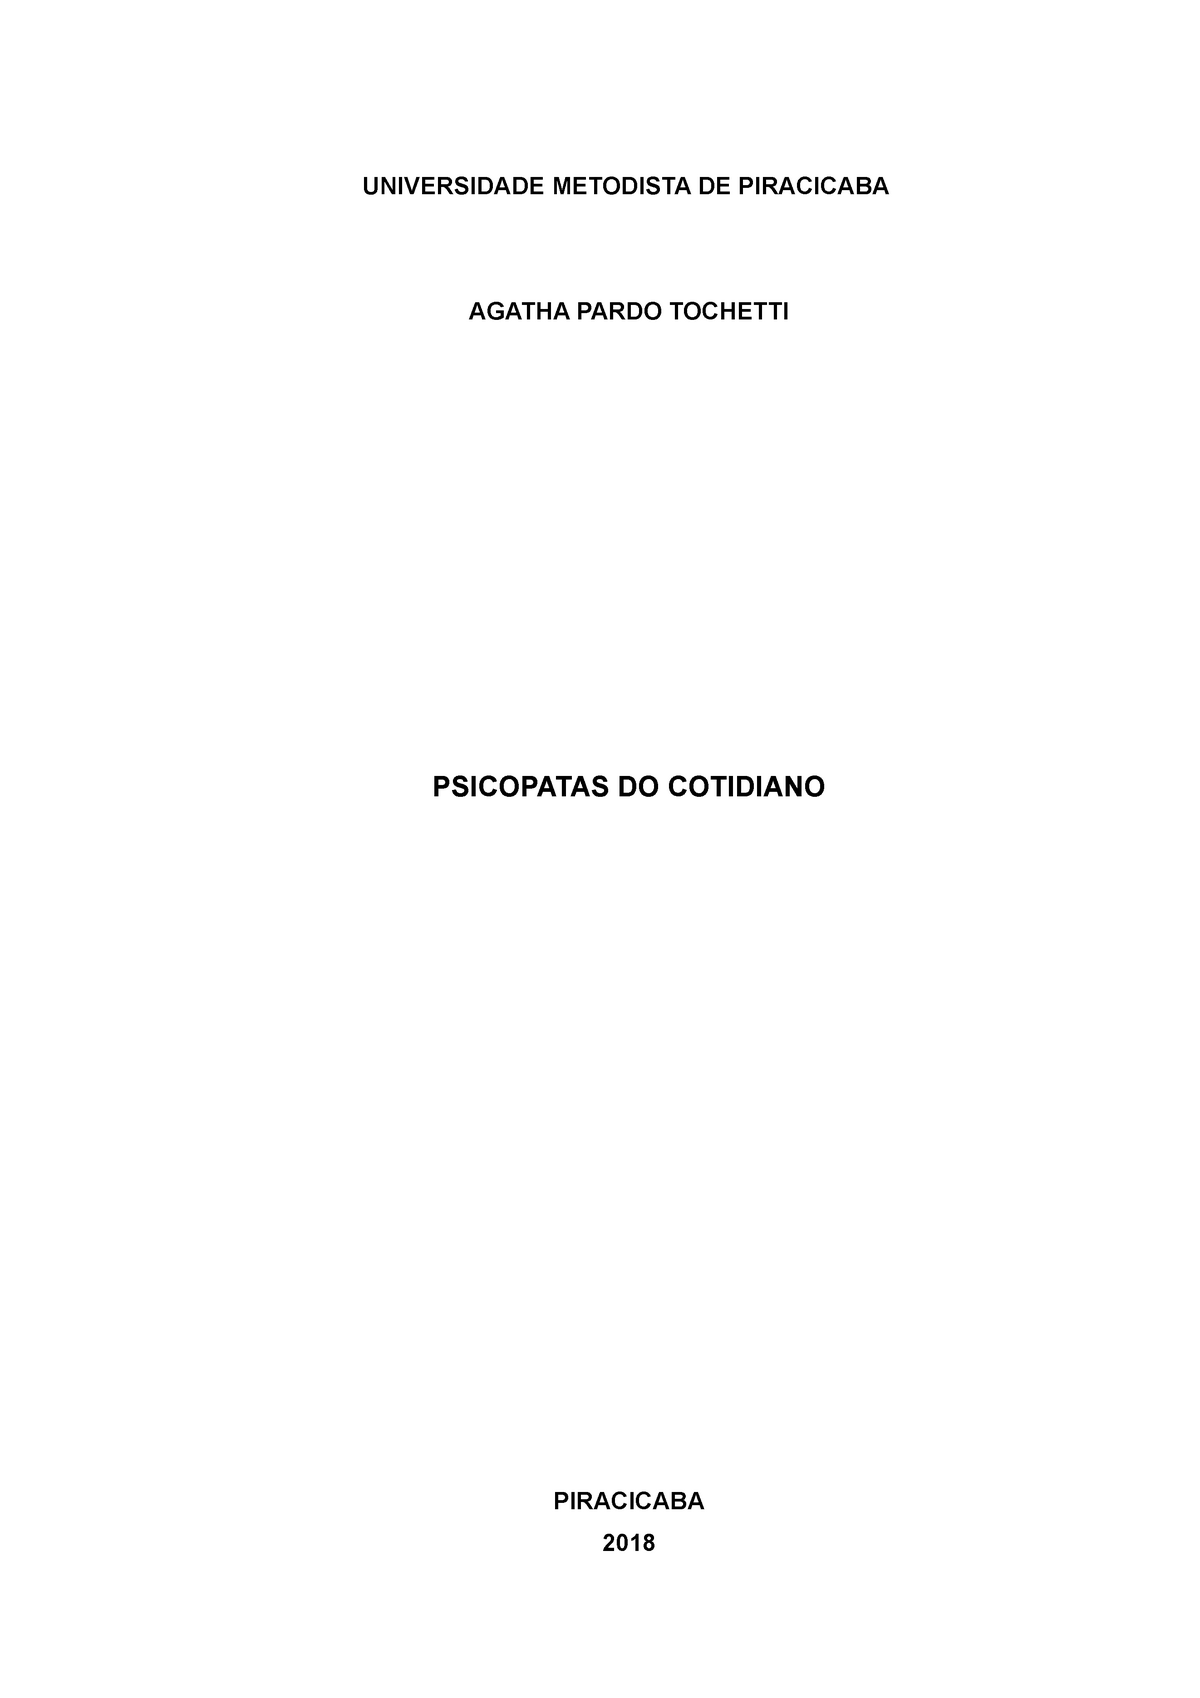 Monografia Psicopatas Do Cotidiano Universidade Metodista De Piracicaba Agatha Pardo Tochetti 6731